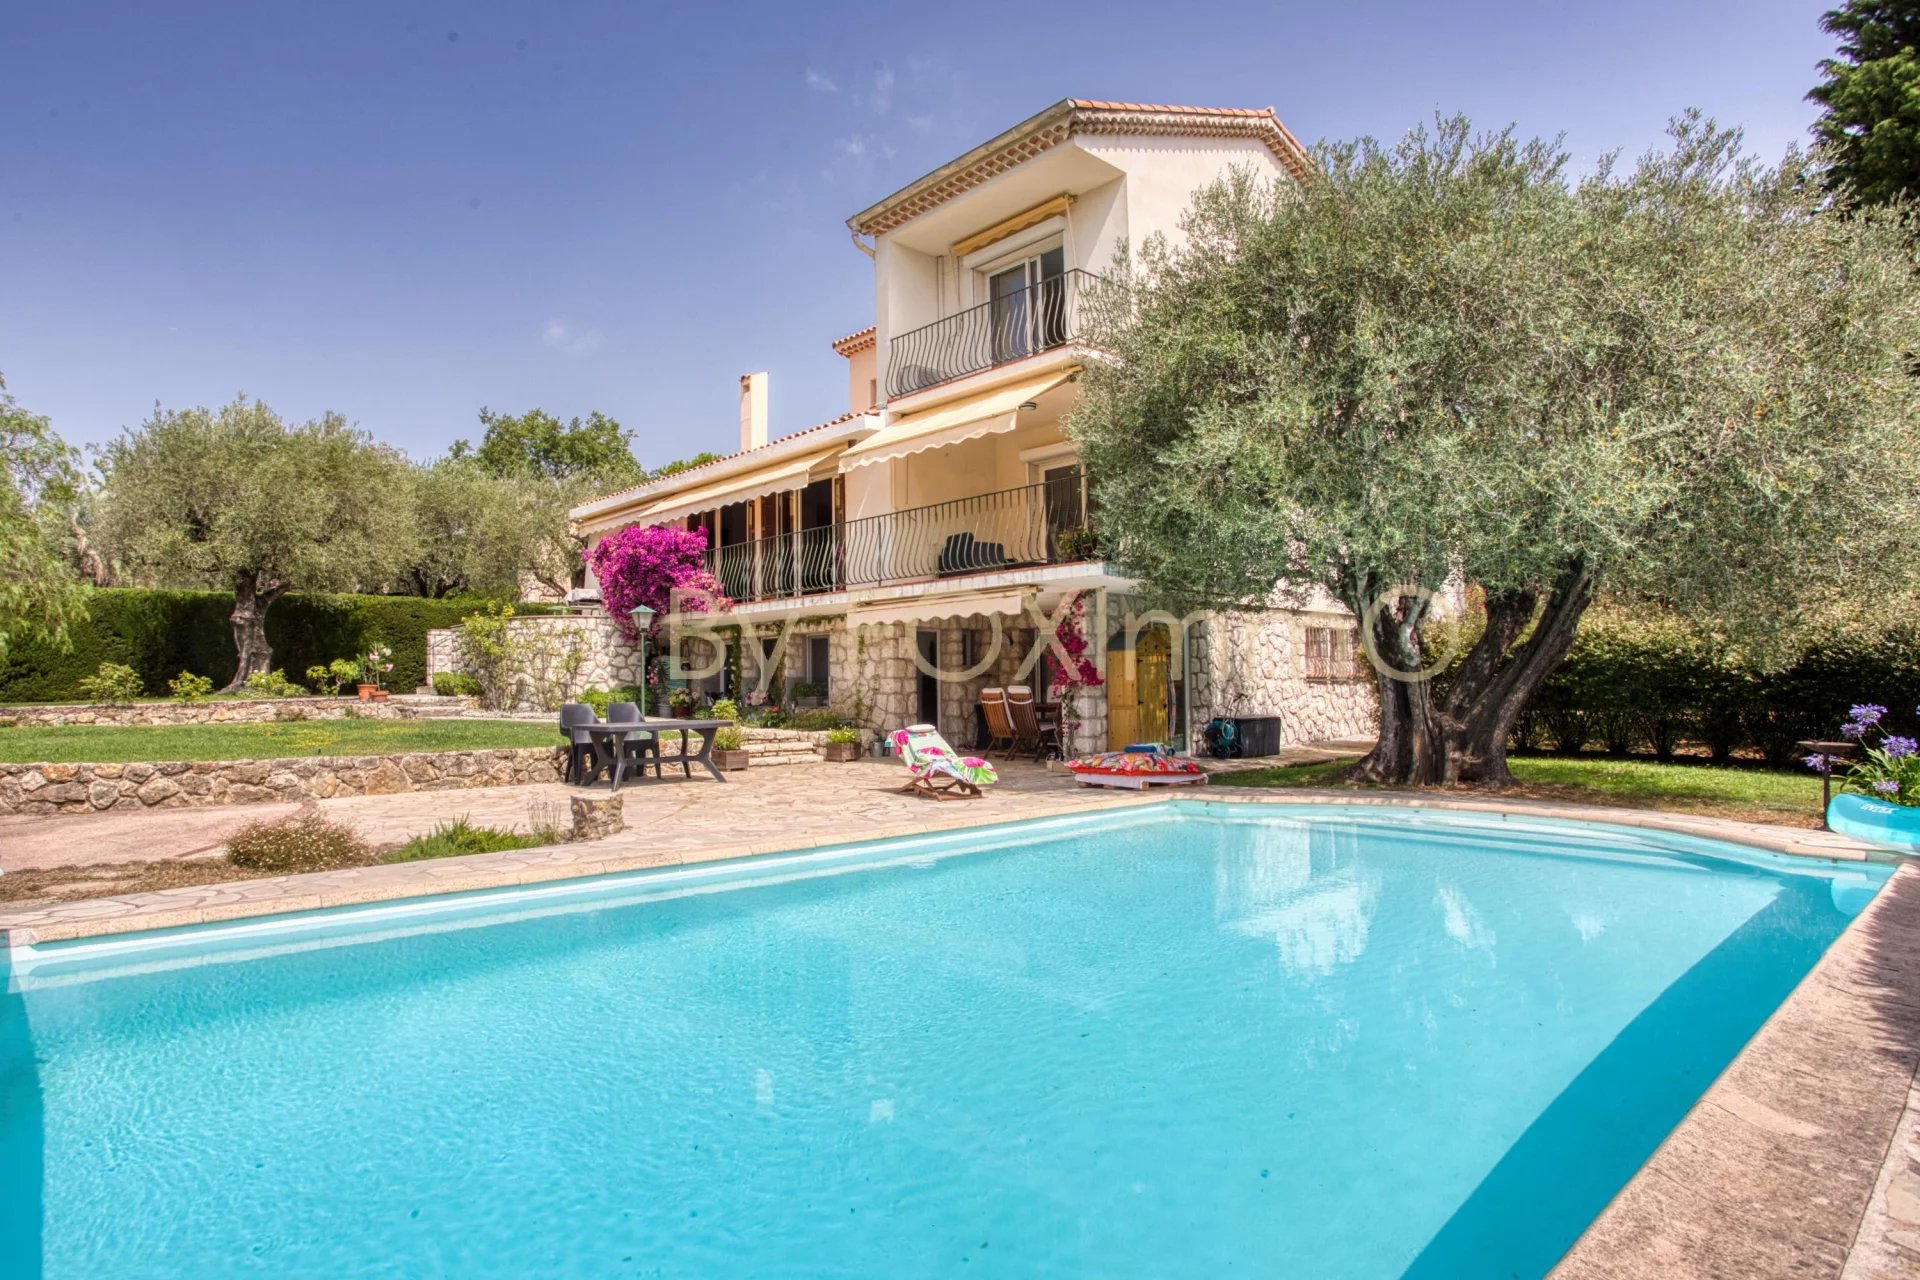 Côte d'Azur villa indipendente, zona tranquilla, piscina, Appartamento indipendente